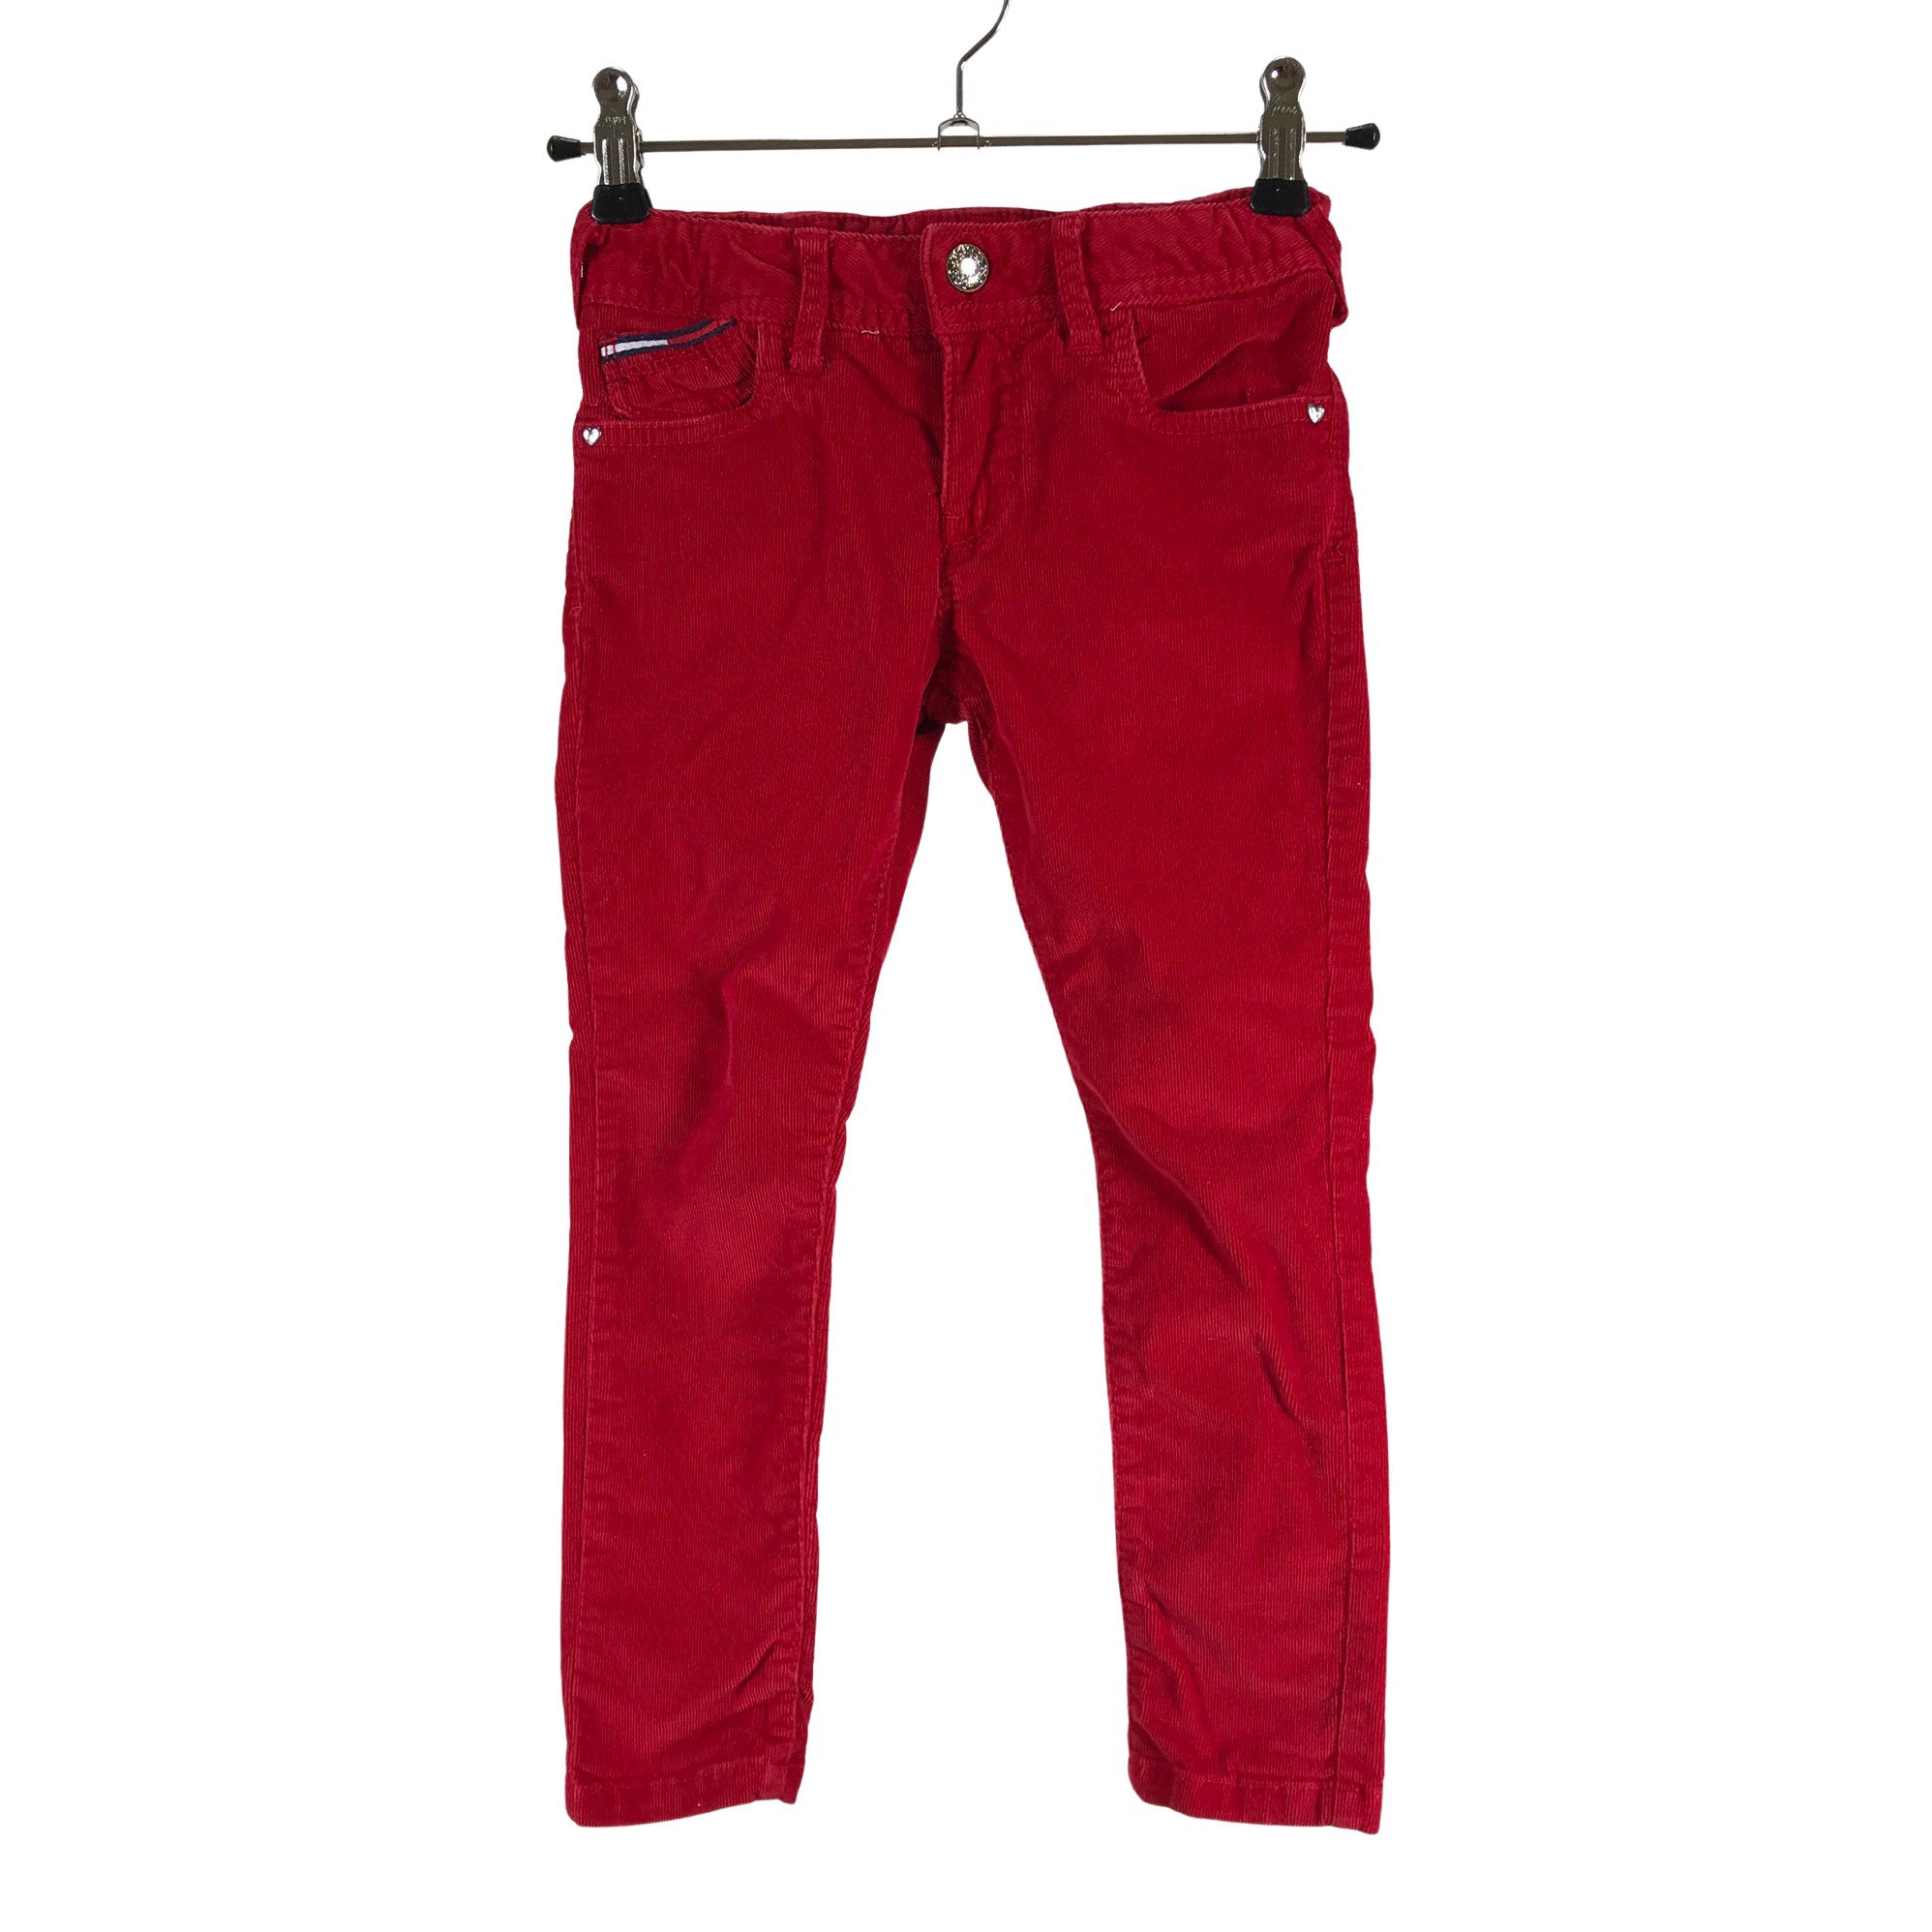 Burma udredning tyk Girls' Tommy Hilfiger Velvet pants, size 98 - 104 (Red) | Emmy